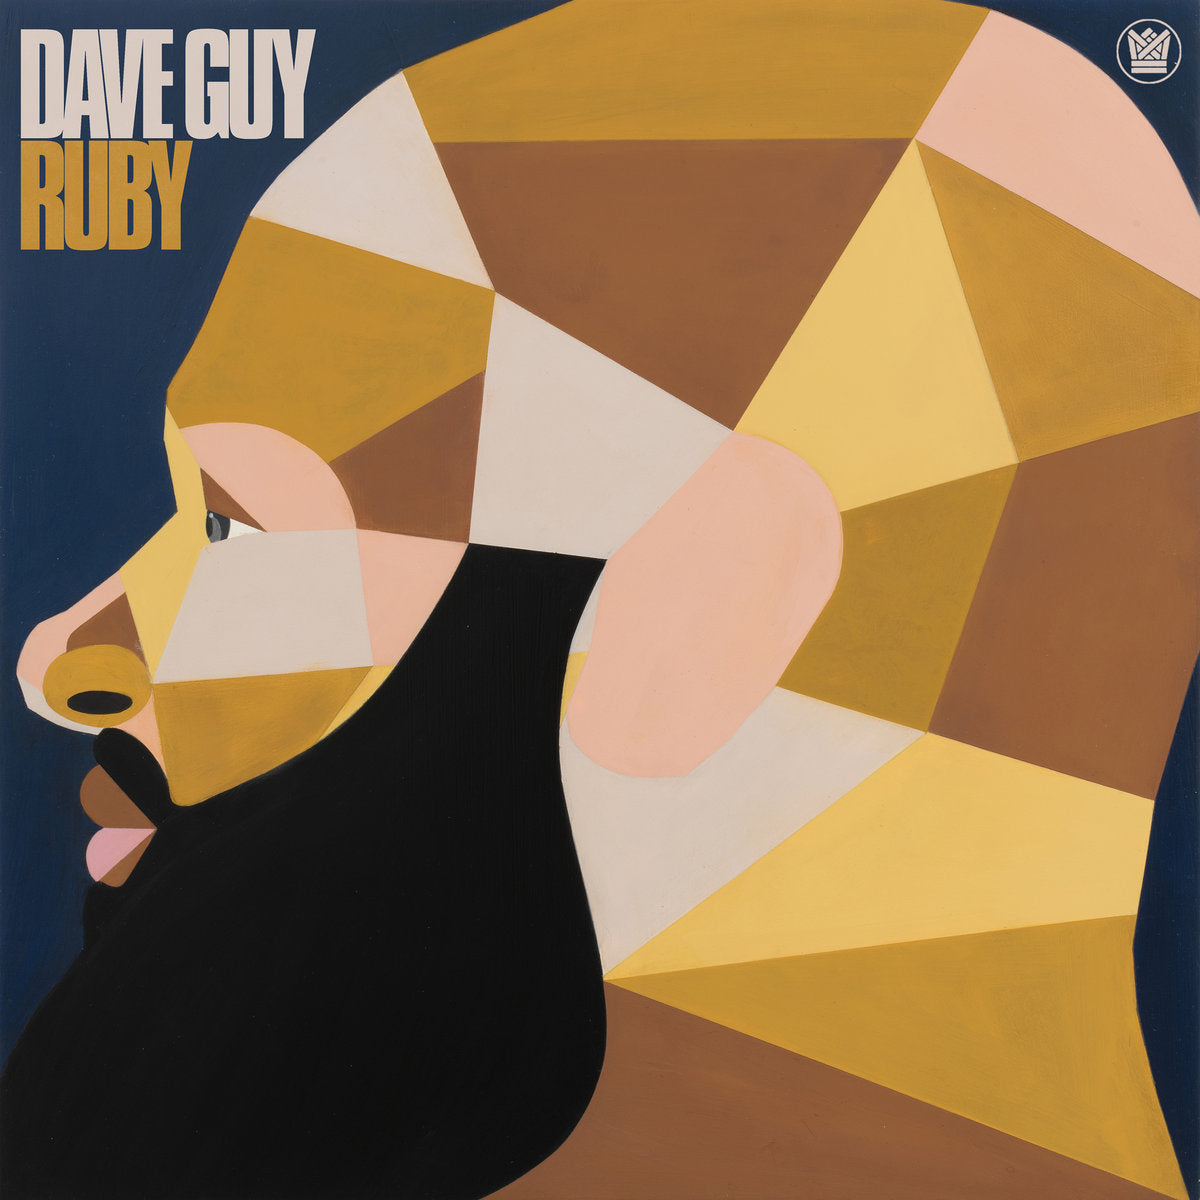 DAVE GUY - Ruby - LP - Blue Smoke Vinyl [SEP 20]